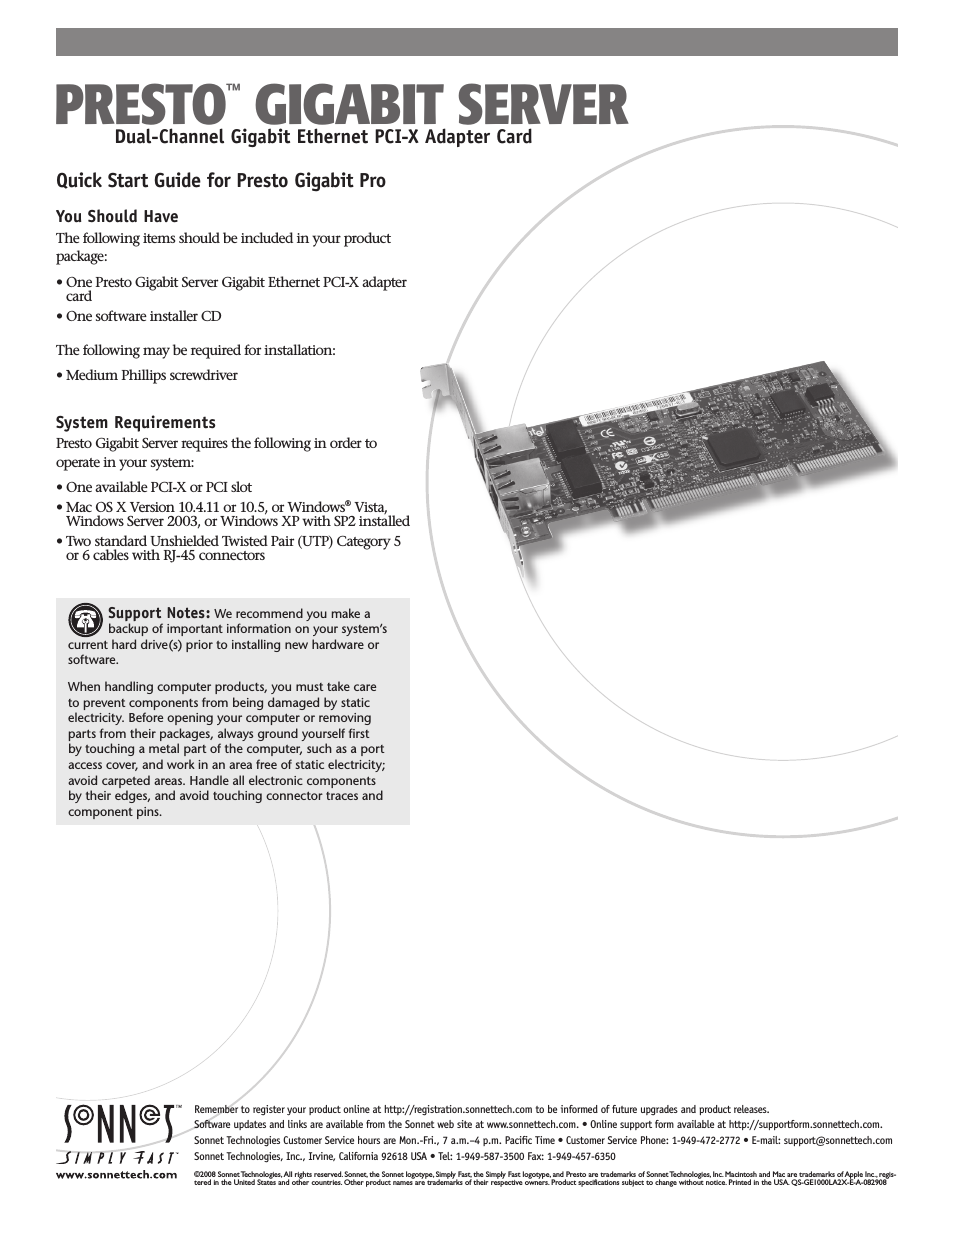 Presto Gigabit Server Dual-Channel Gigabit Ethernet PCI-X Adapter Card